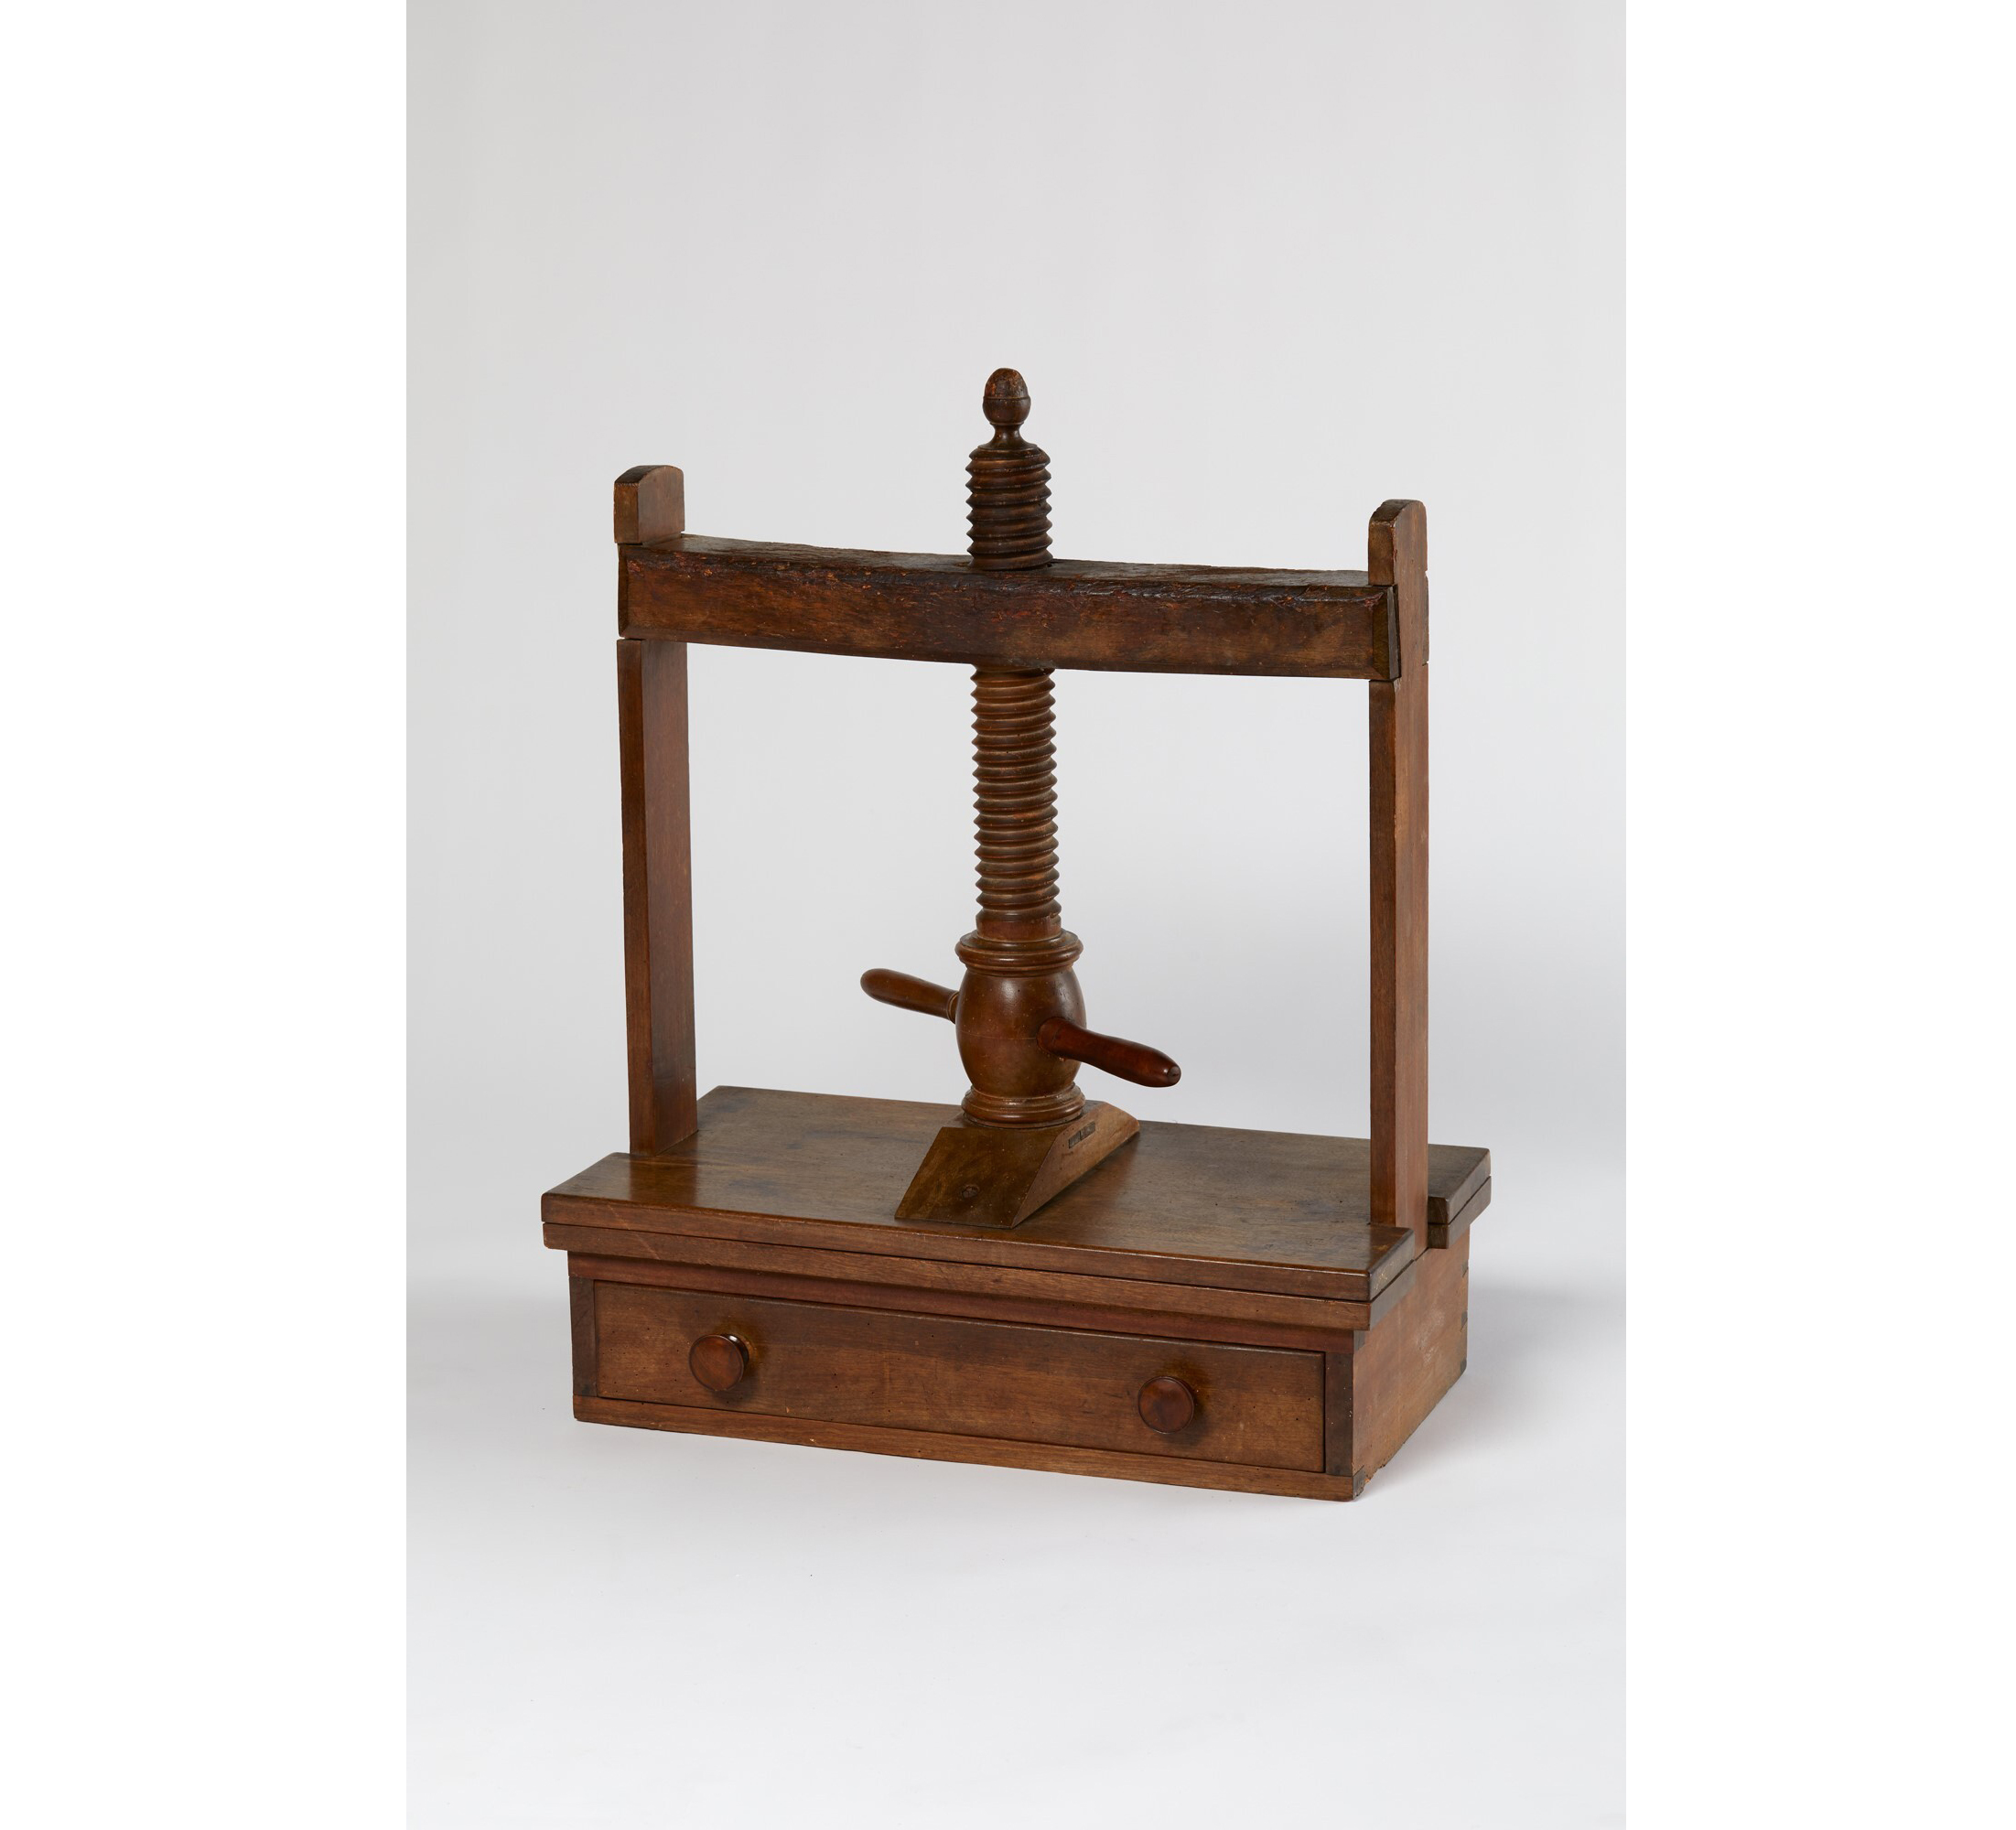 Book press, late 18th century, wood, 2022.03.003, Photo ©John Bigelow Taylor